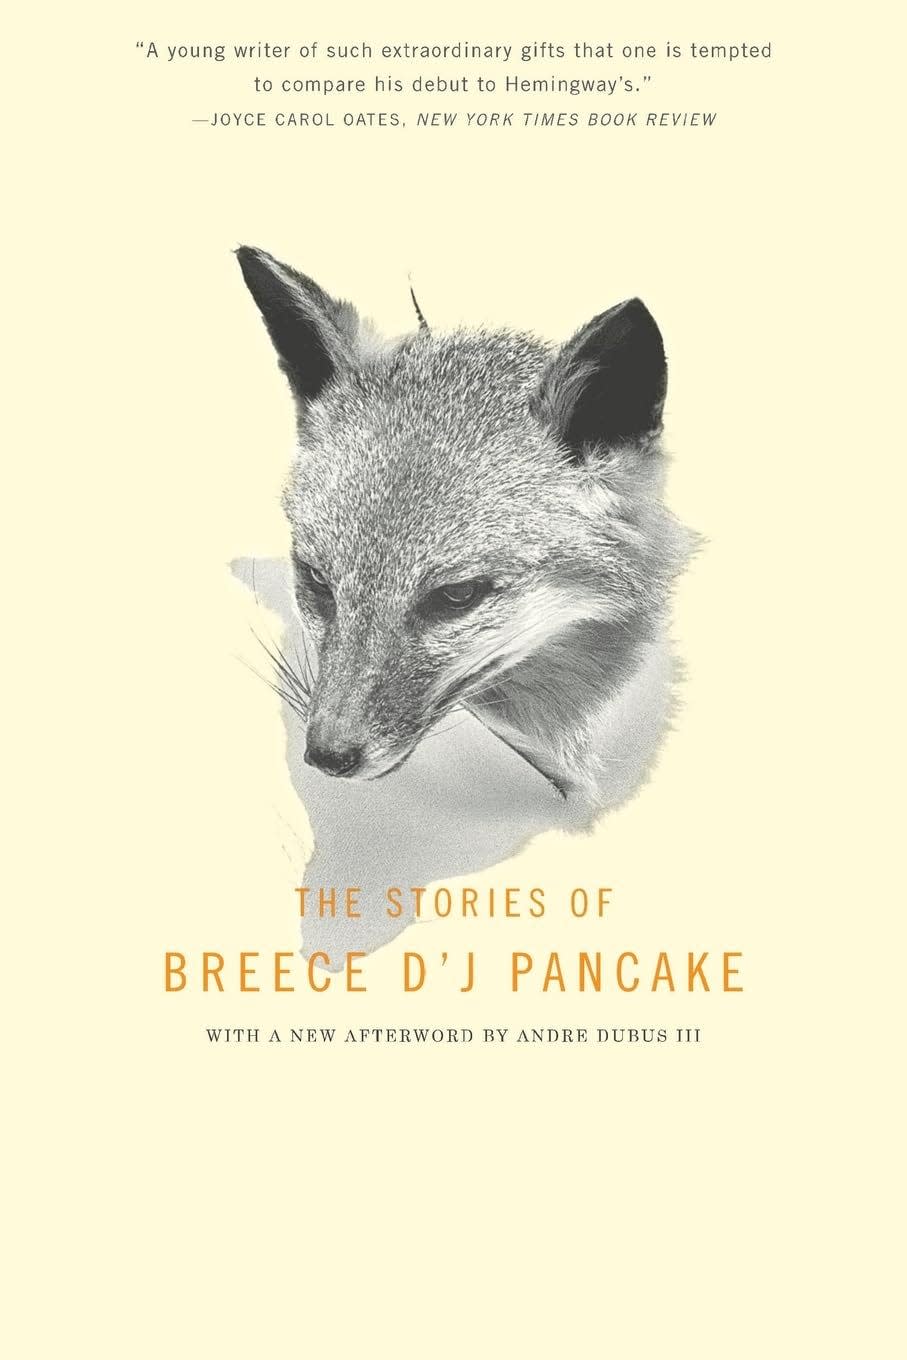 "The Stories of Breece D’J Pancake"